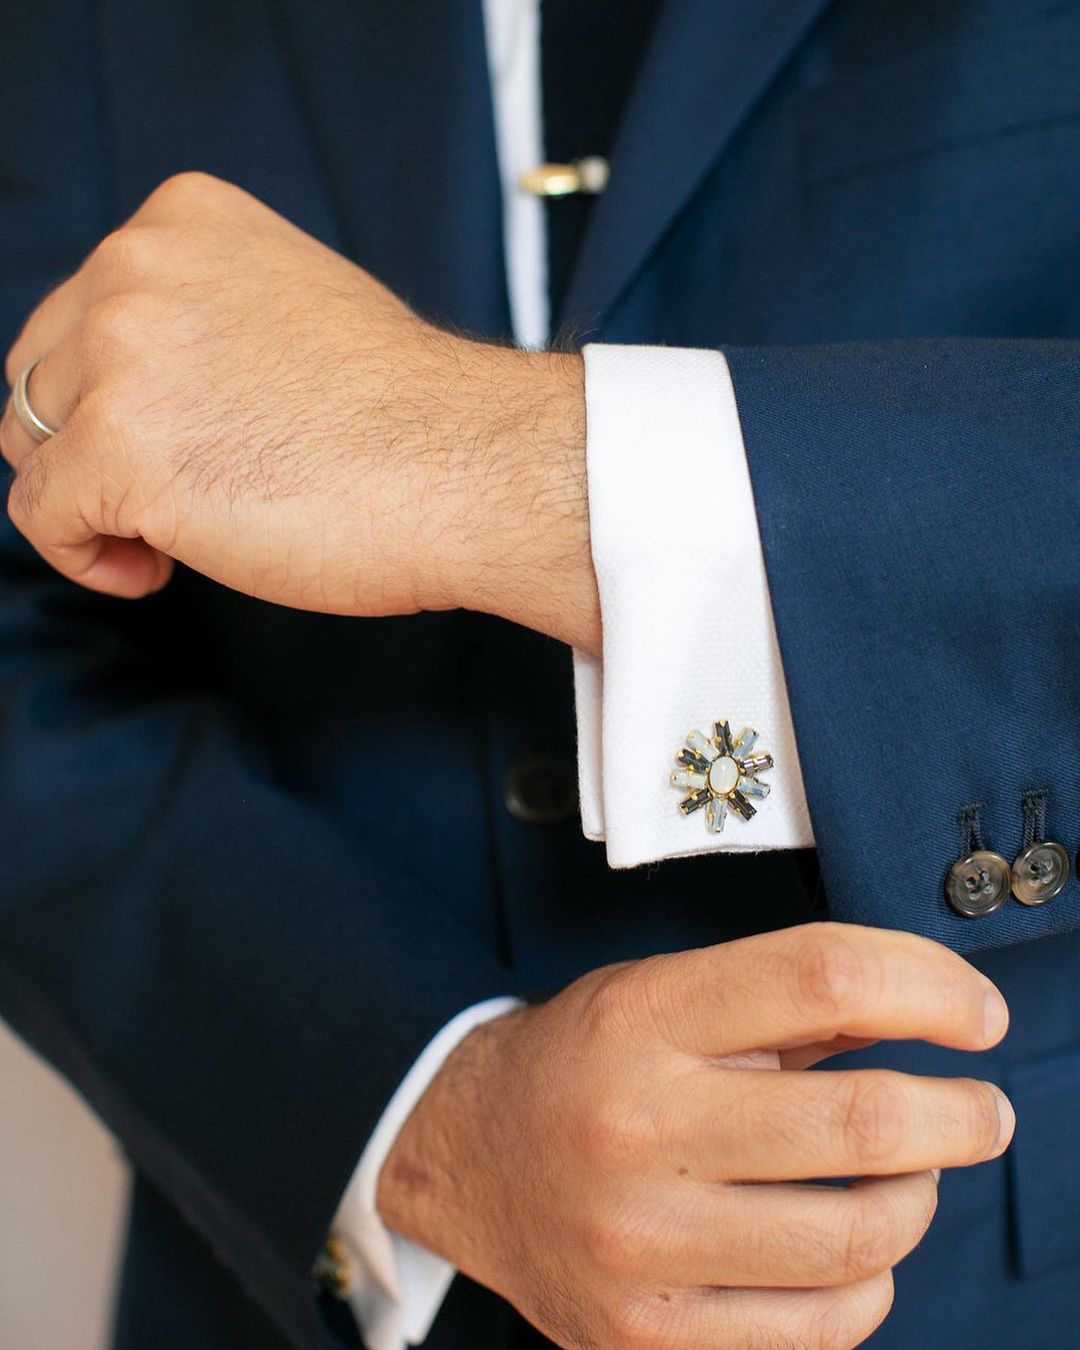 cufflinks accessorized in a cocktail attire